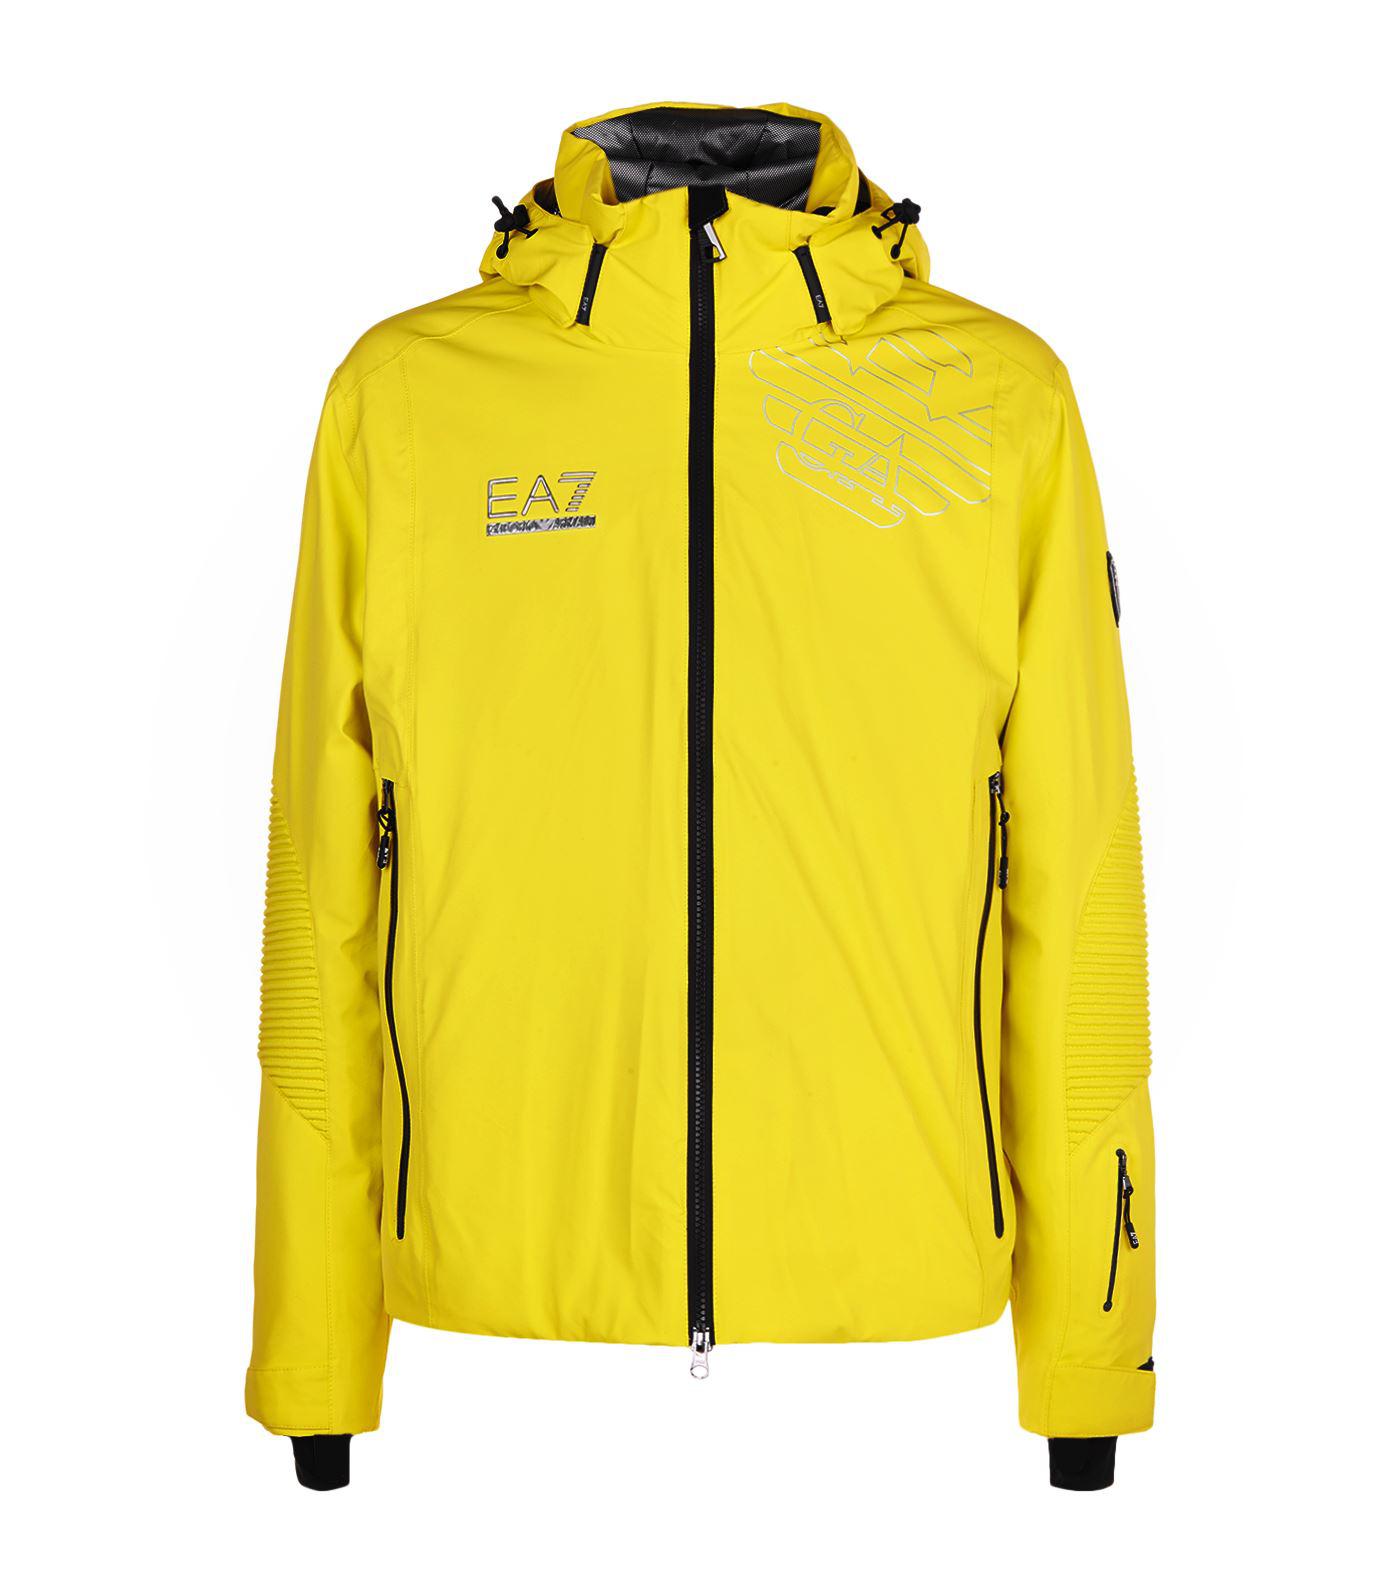 Armani Ski Jacket in Yellow for Men - Lyst